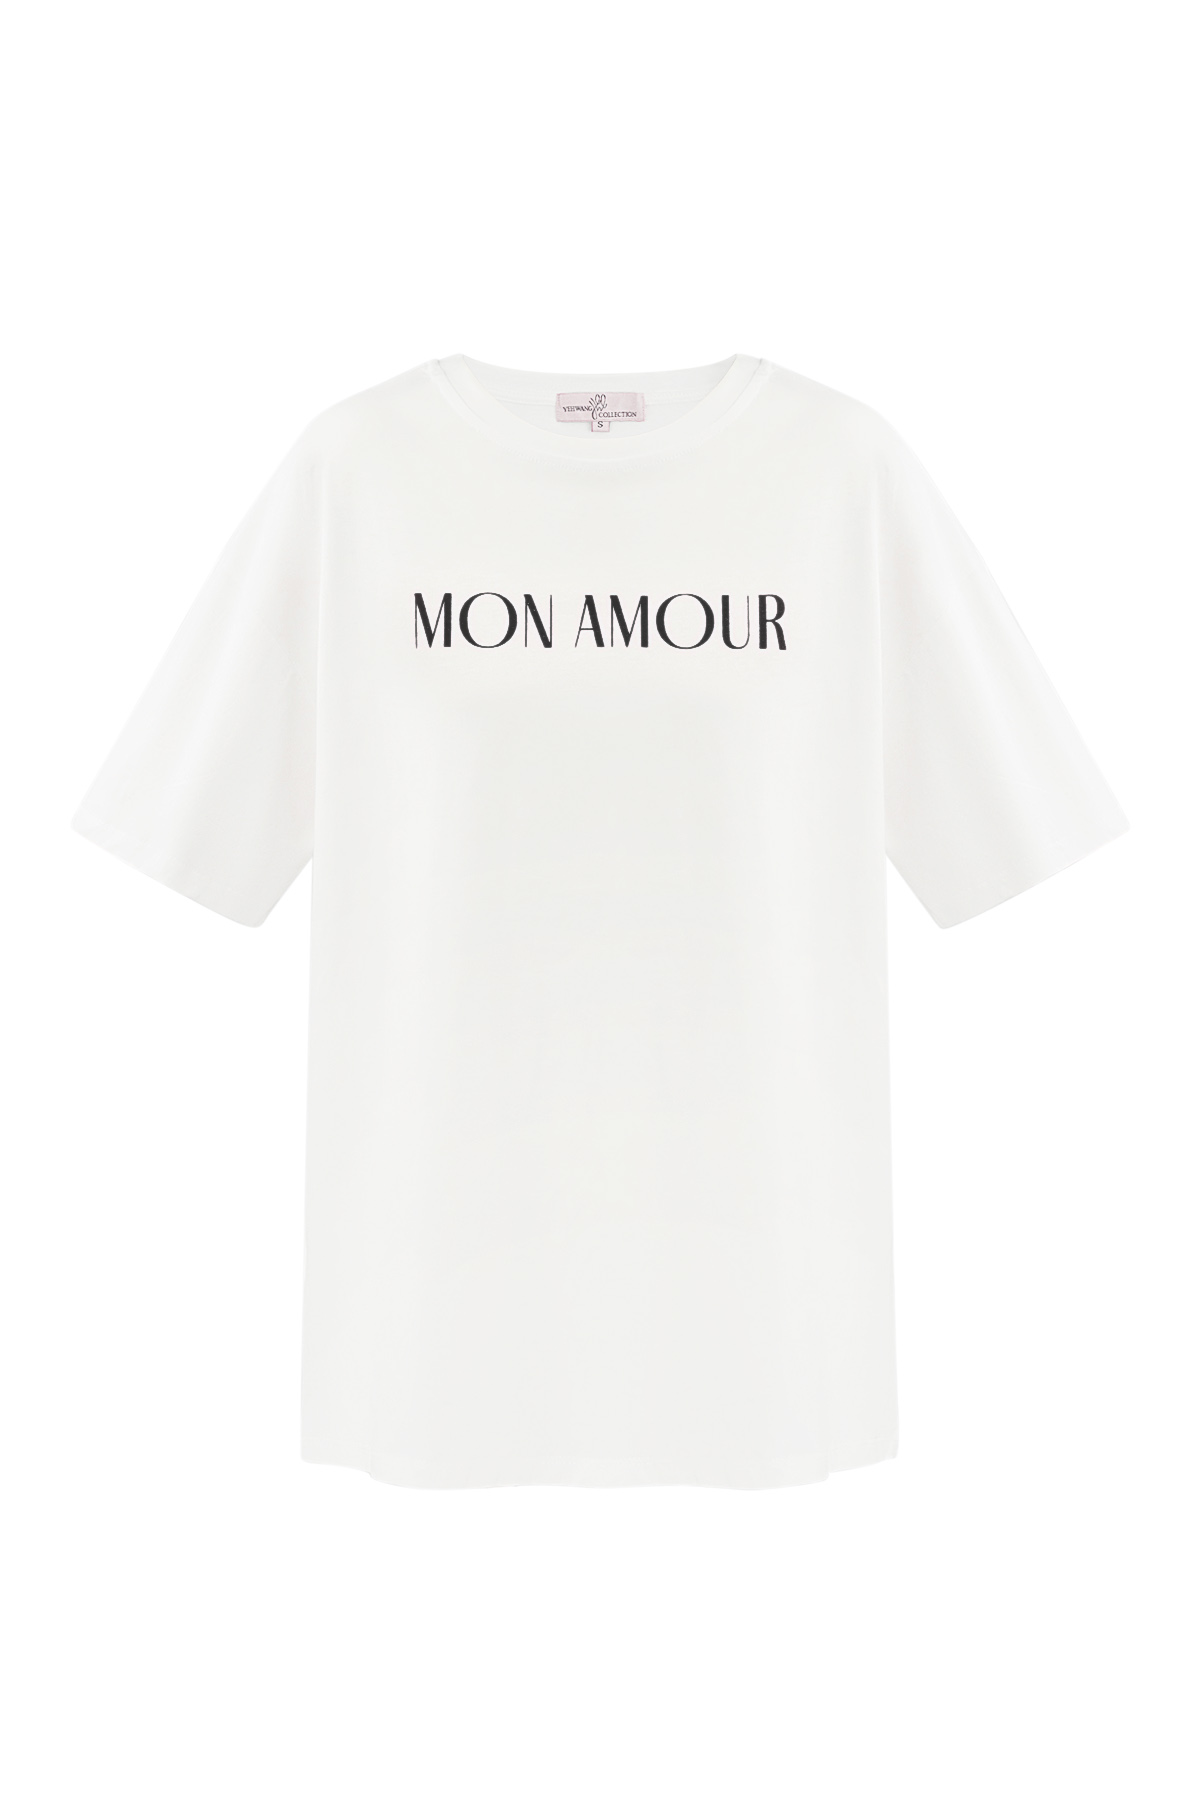 T-shirt mon amour - zwart wit